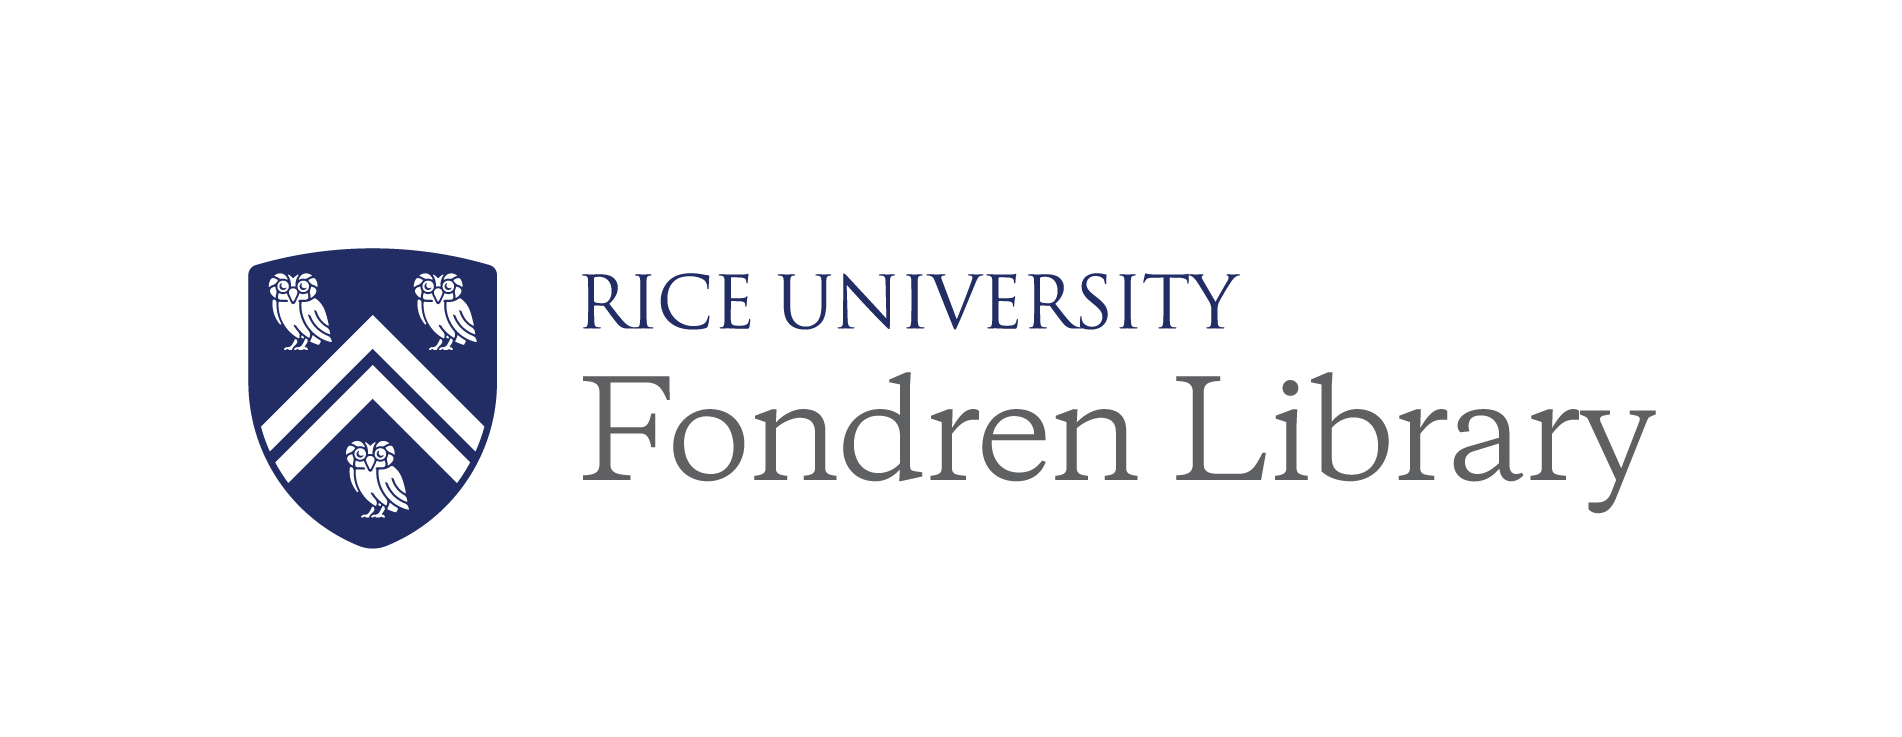 Rice University - Fondren Library